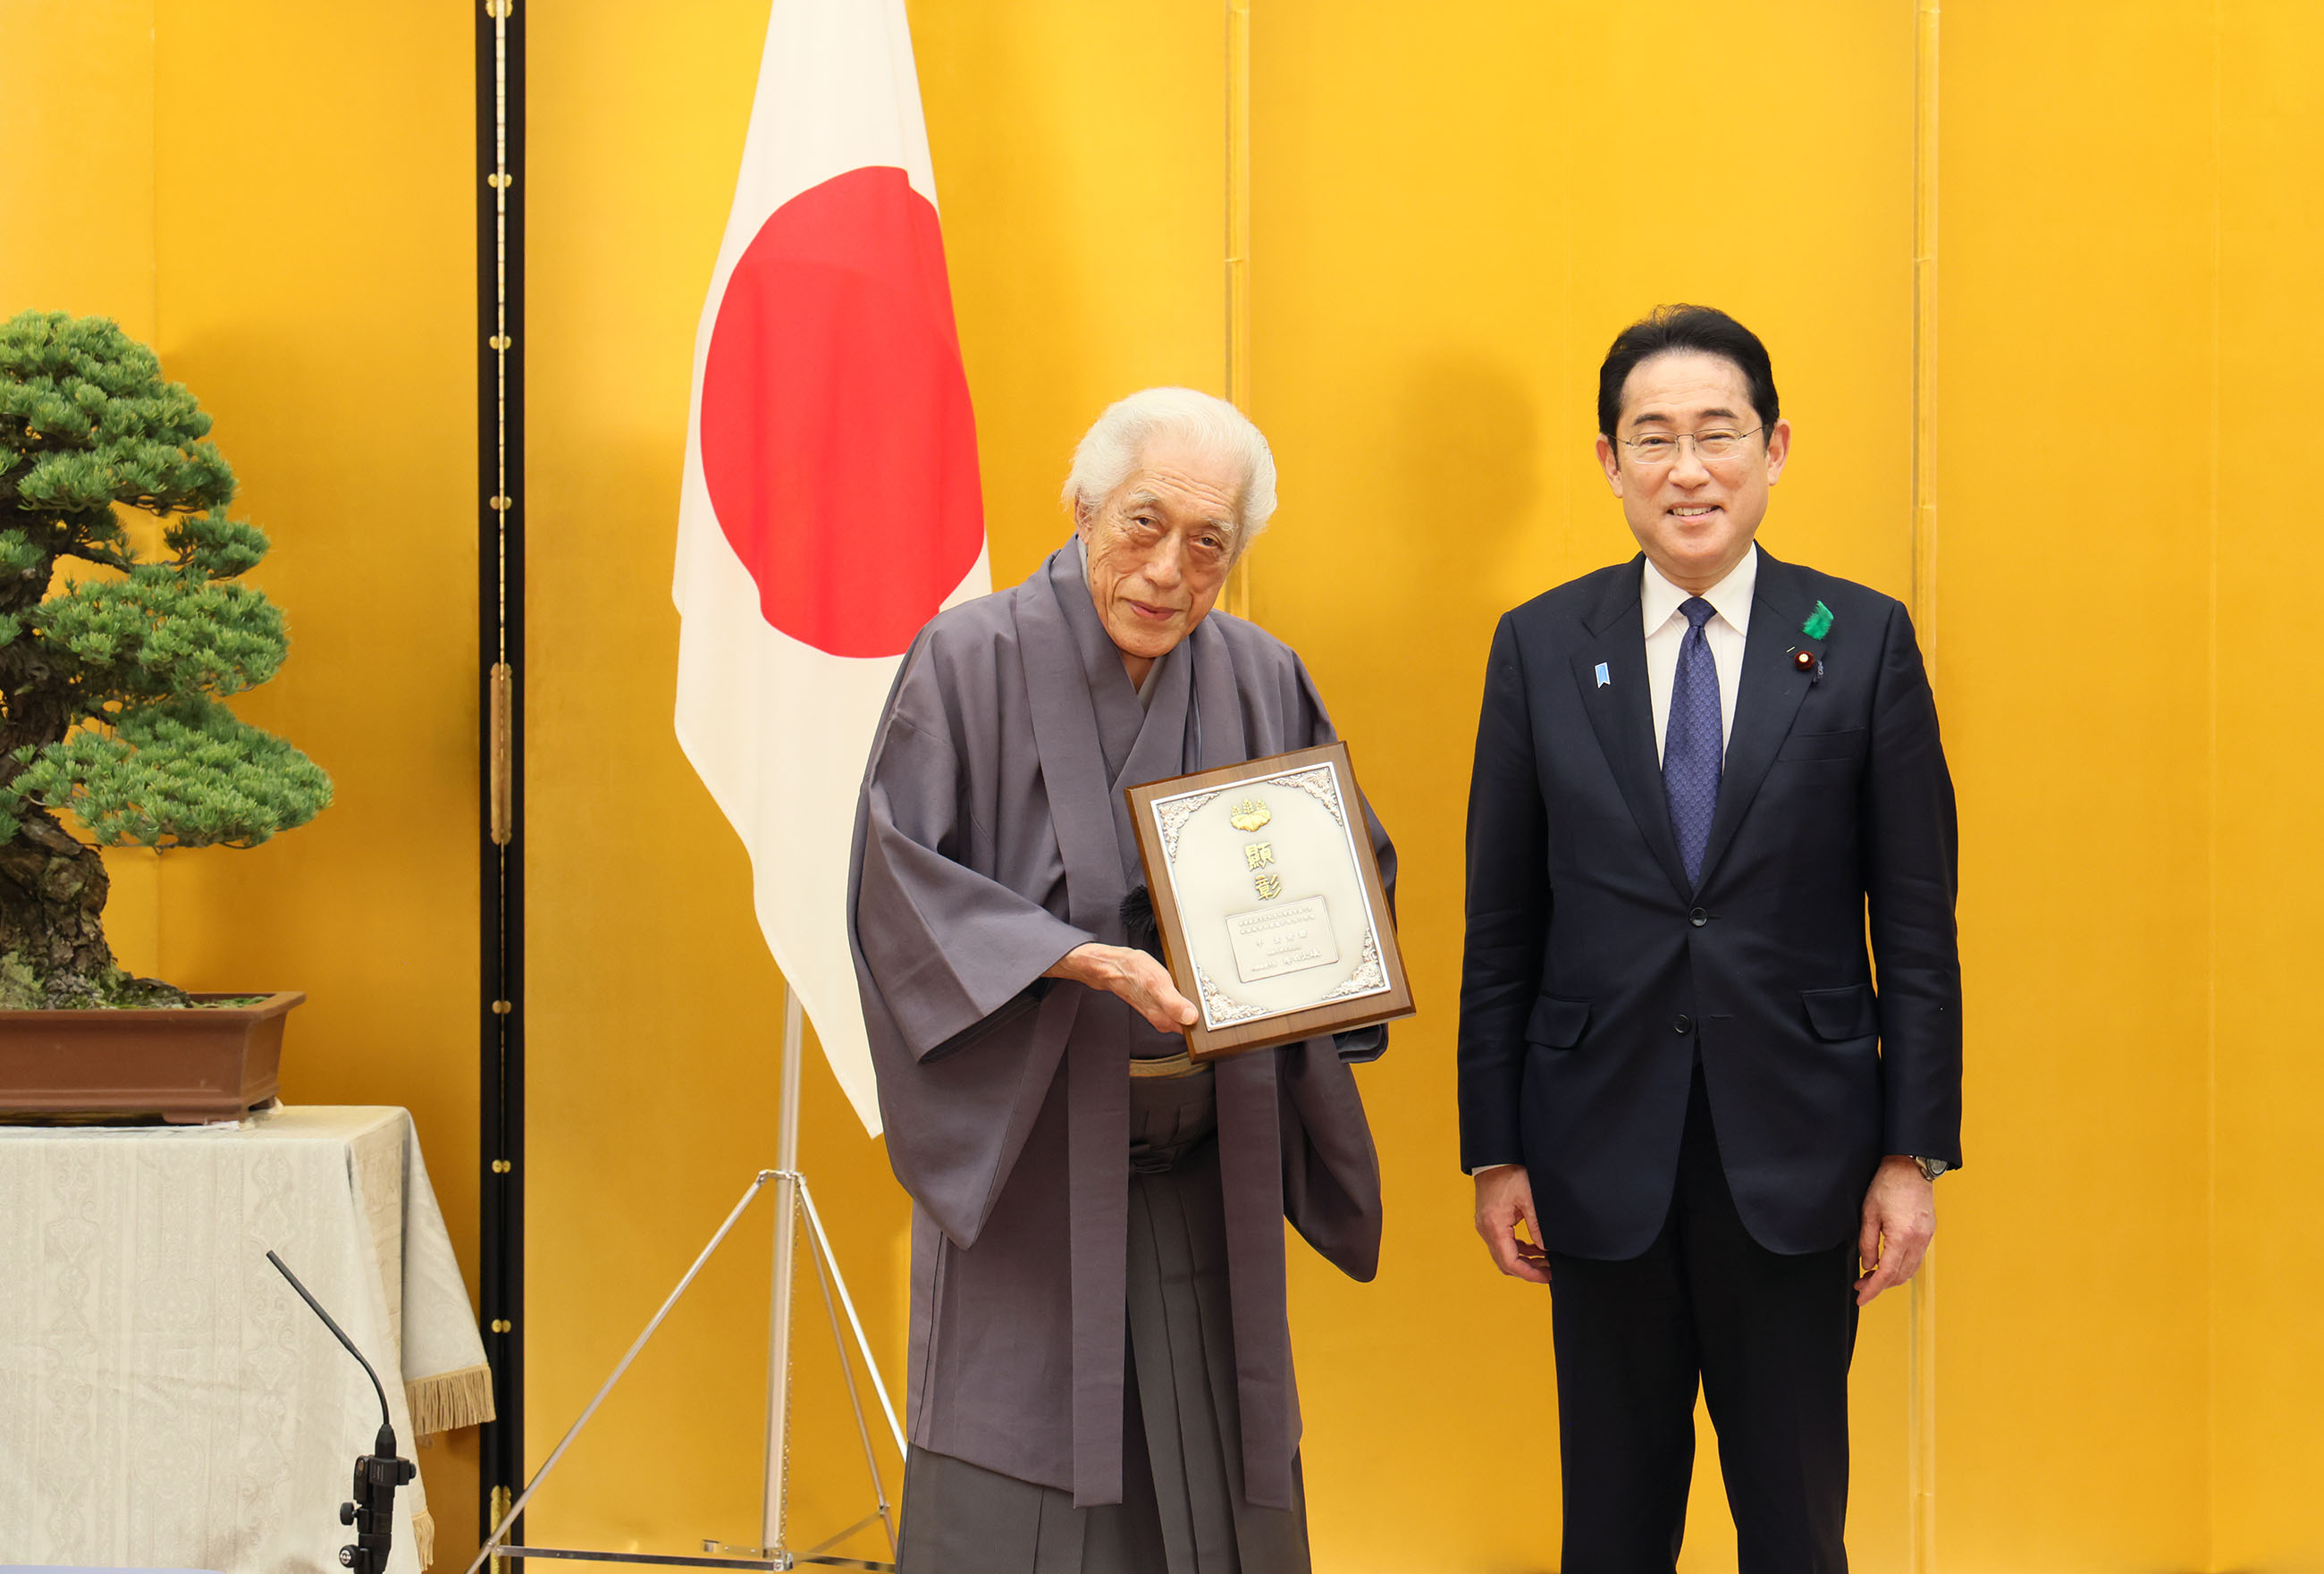 Prime Minister Kishida presenting a shield